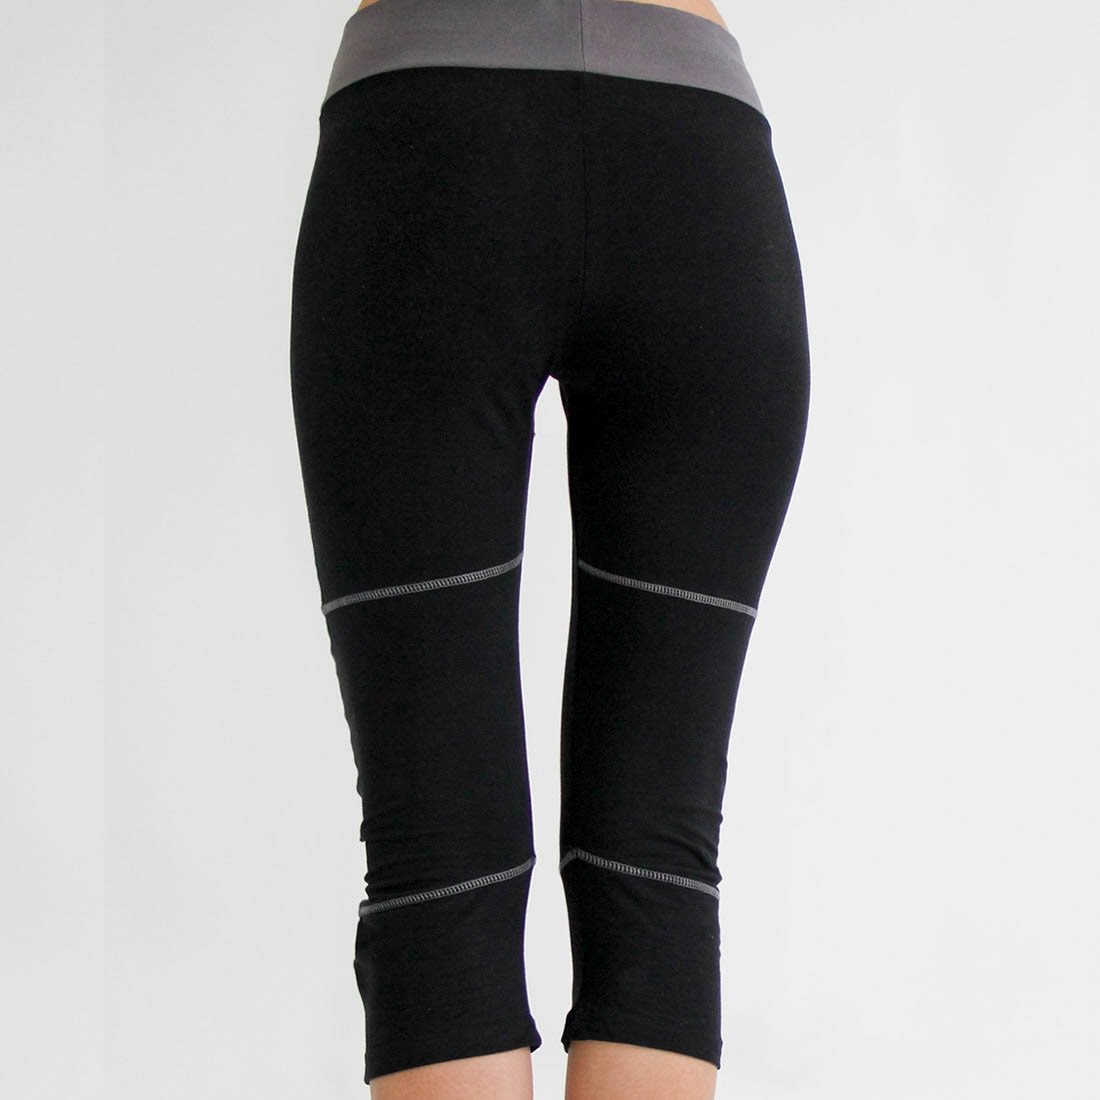 nsendm Unisex Pants Adult Harem Yoga Pants for Women Elastic Mesh Side Slim  Yoga Pants Pants Leggings Sports Running Yoga Pants Fleece Yoga(Black, XL)  